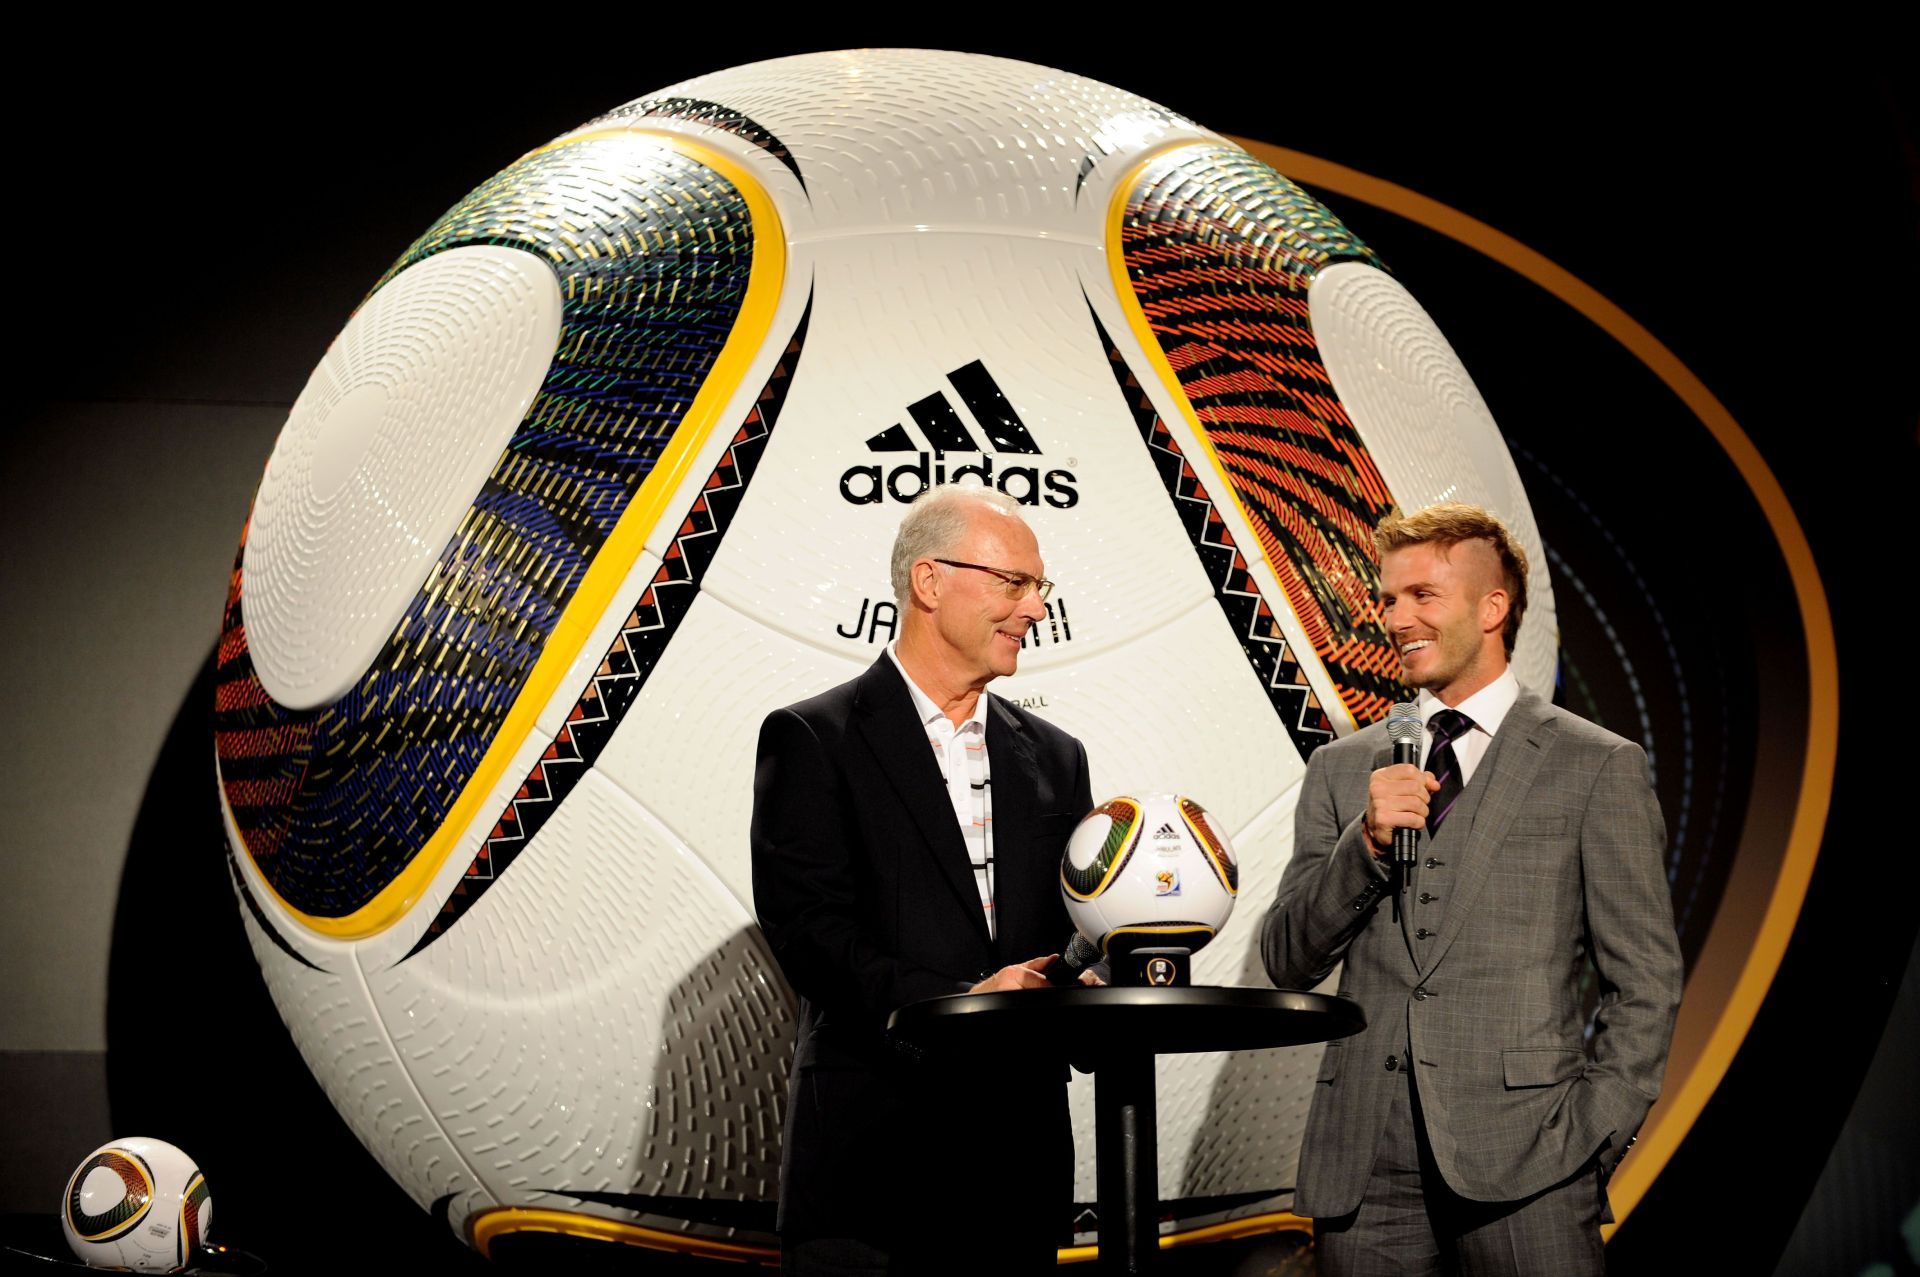 Franz Beckenbauer with David Beckham